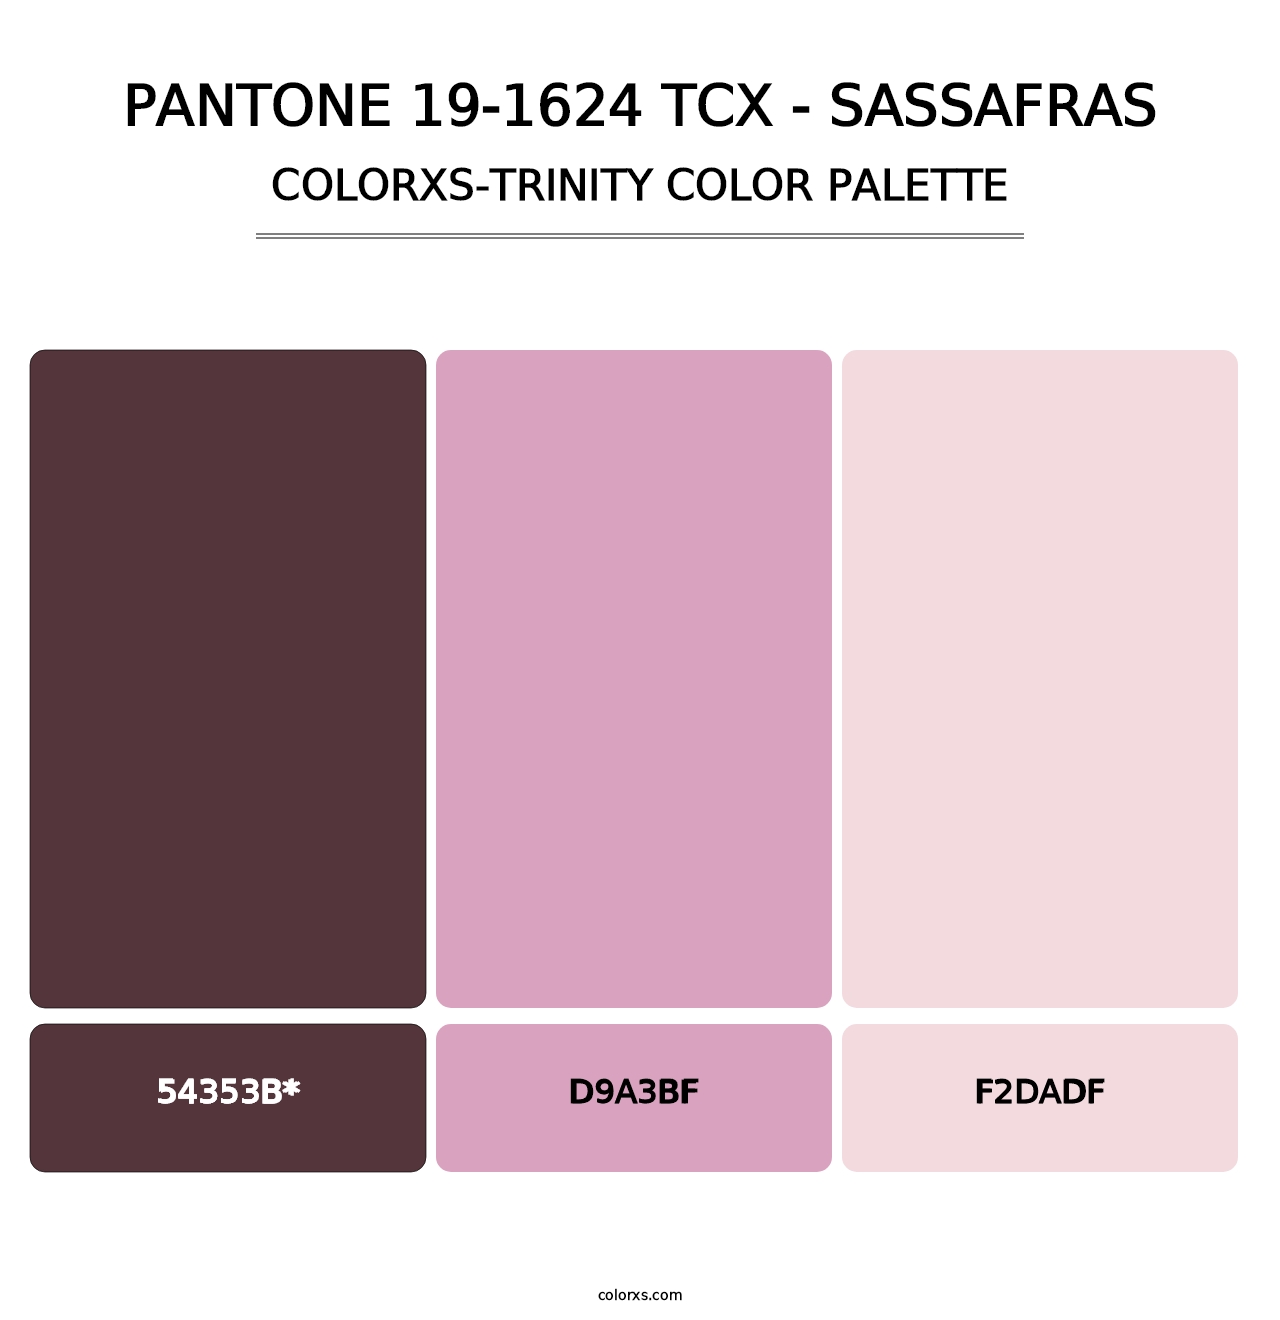 PANTONE 19-1624 TCX - Sassafras - Colorxs Trinity Palette